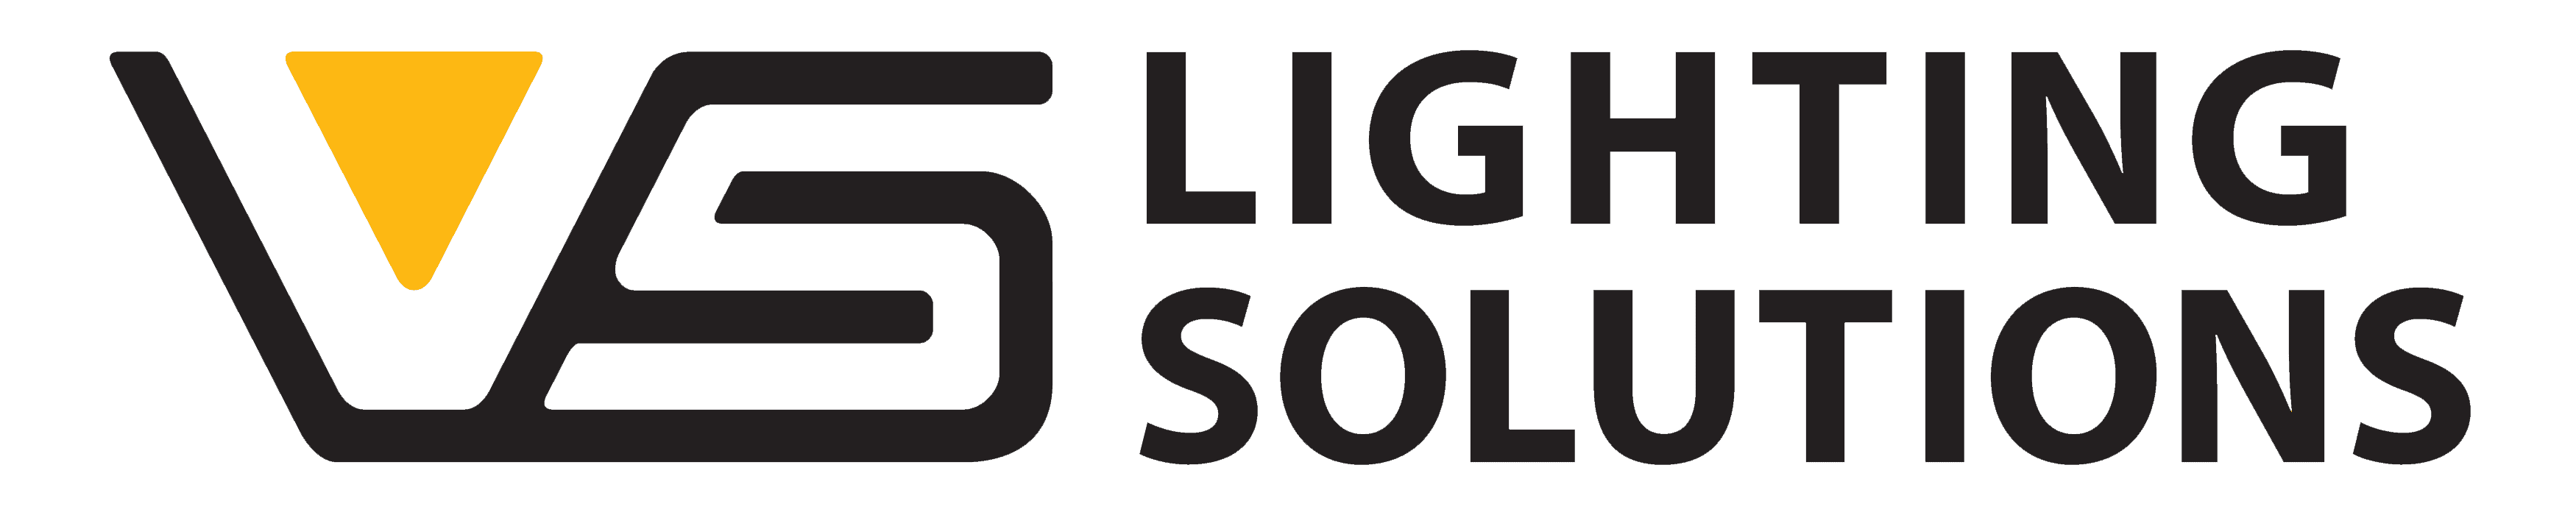 VS_Lighting-Solutions_4C_Positiv